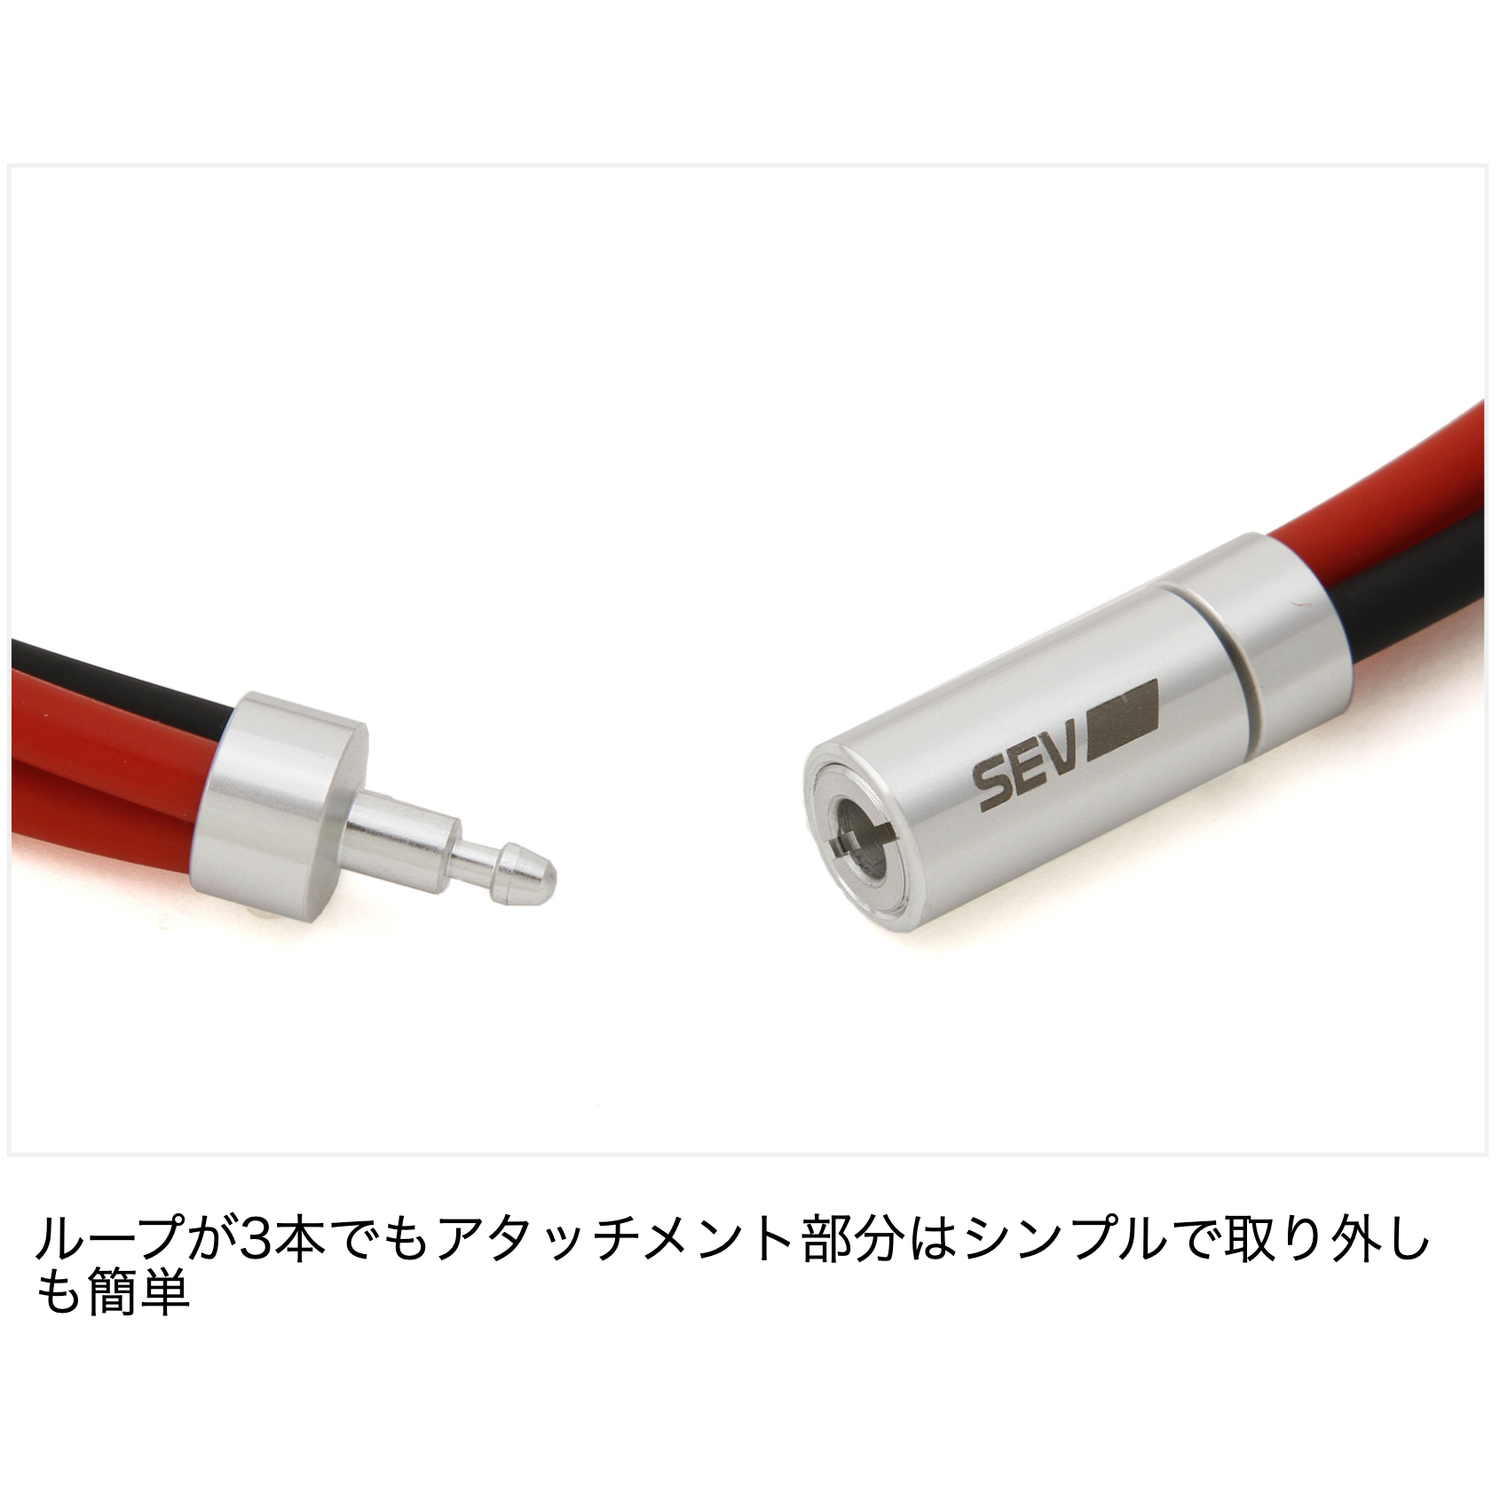 SEV ルーパー タイプ 3M 黒 赤 赤 size48大手カー用品店で購入